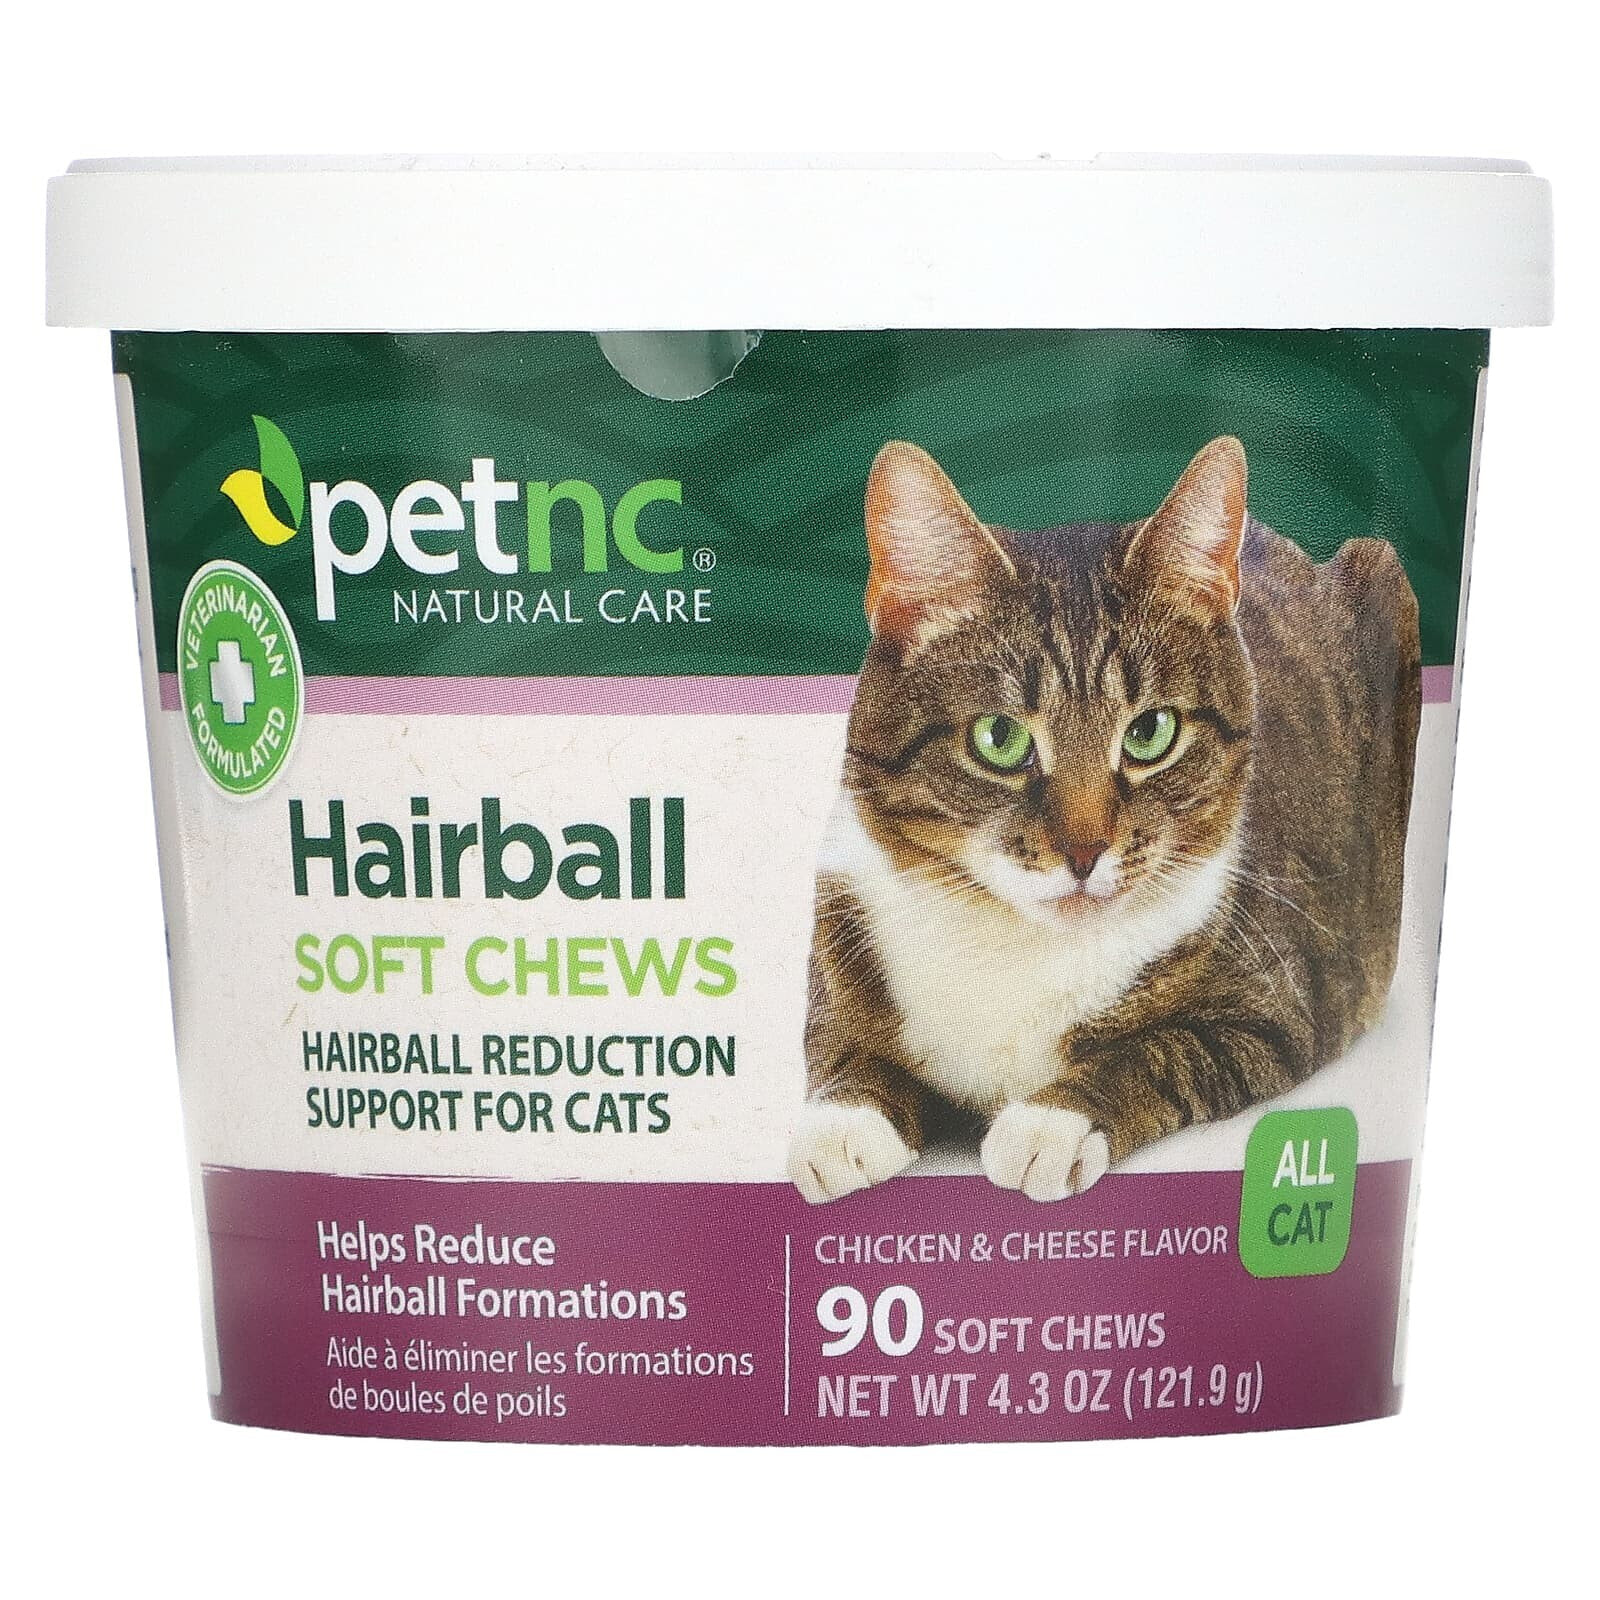 Hairball Soft Chews, All Cat, Chicken & Cheese, 90 Soft Chews, 4.3 oz (121.9 g)